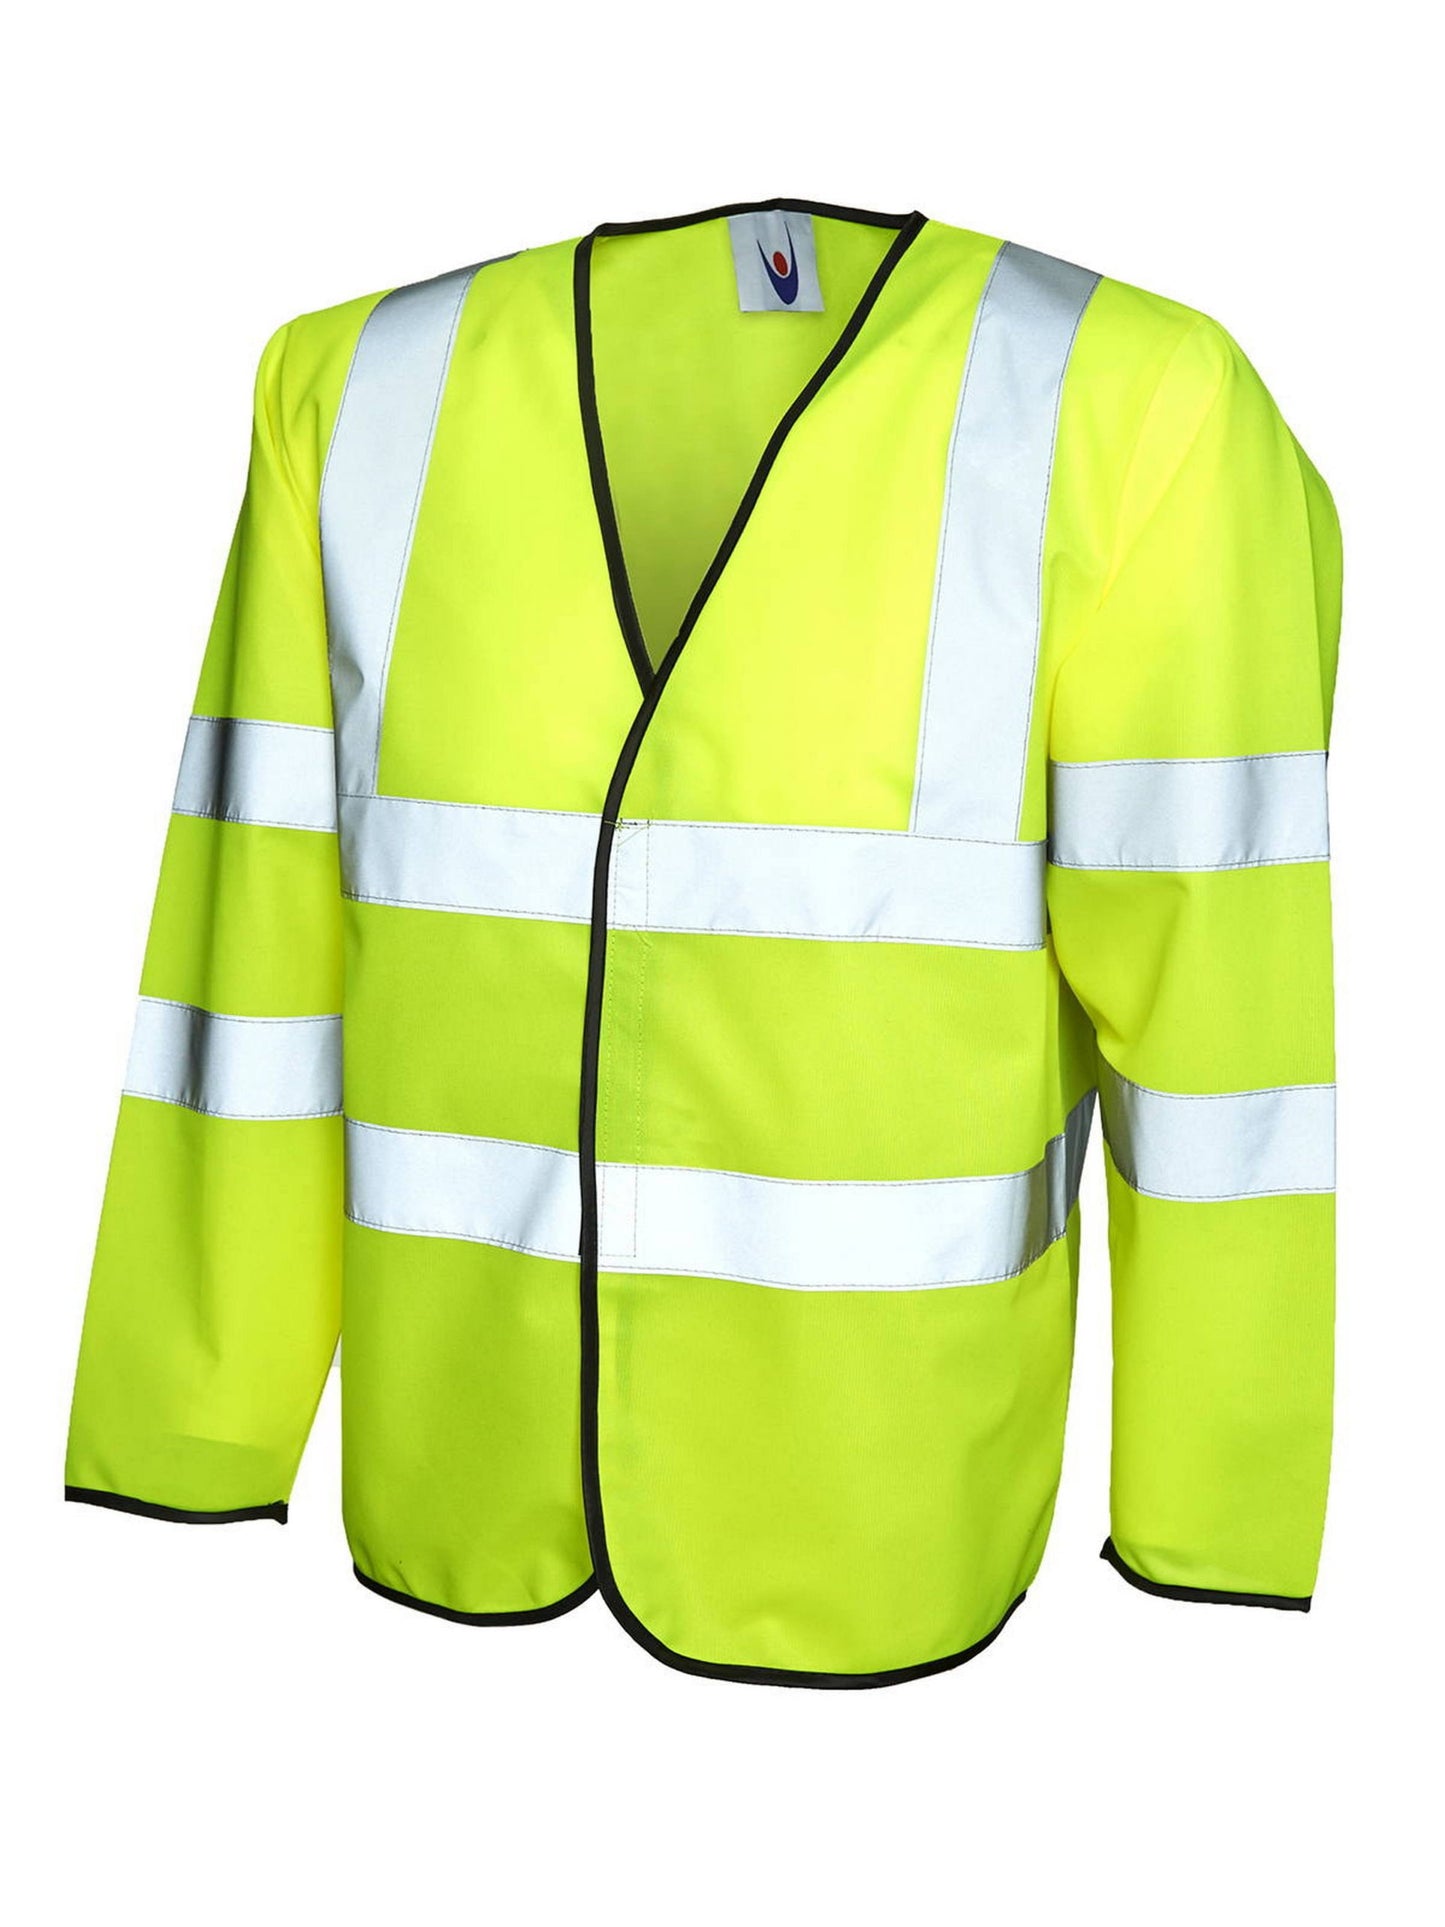 UC802 - Long Sleeve Safety Waist Coat